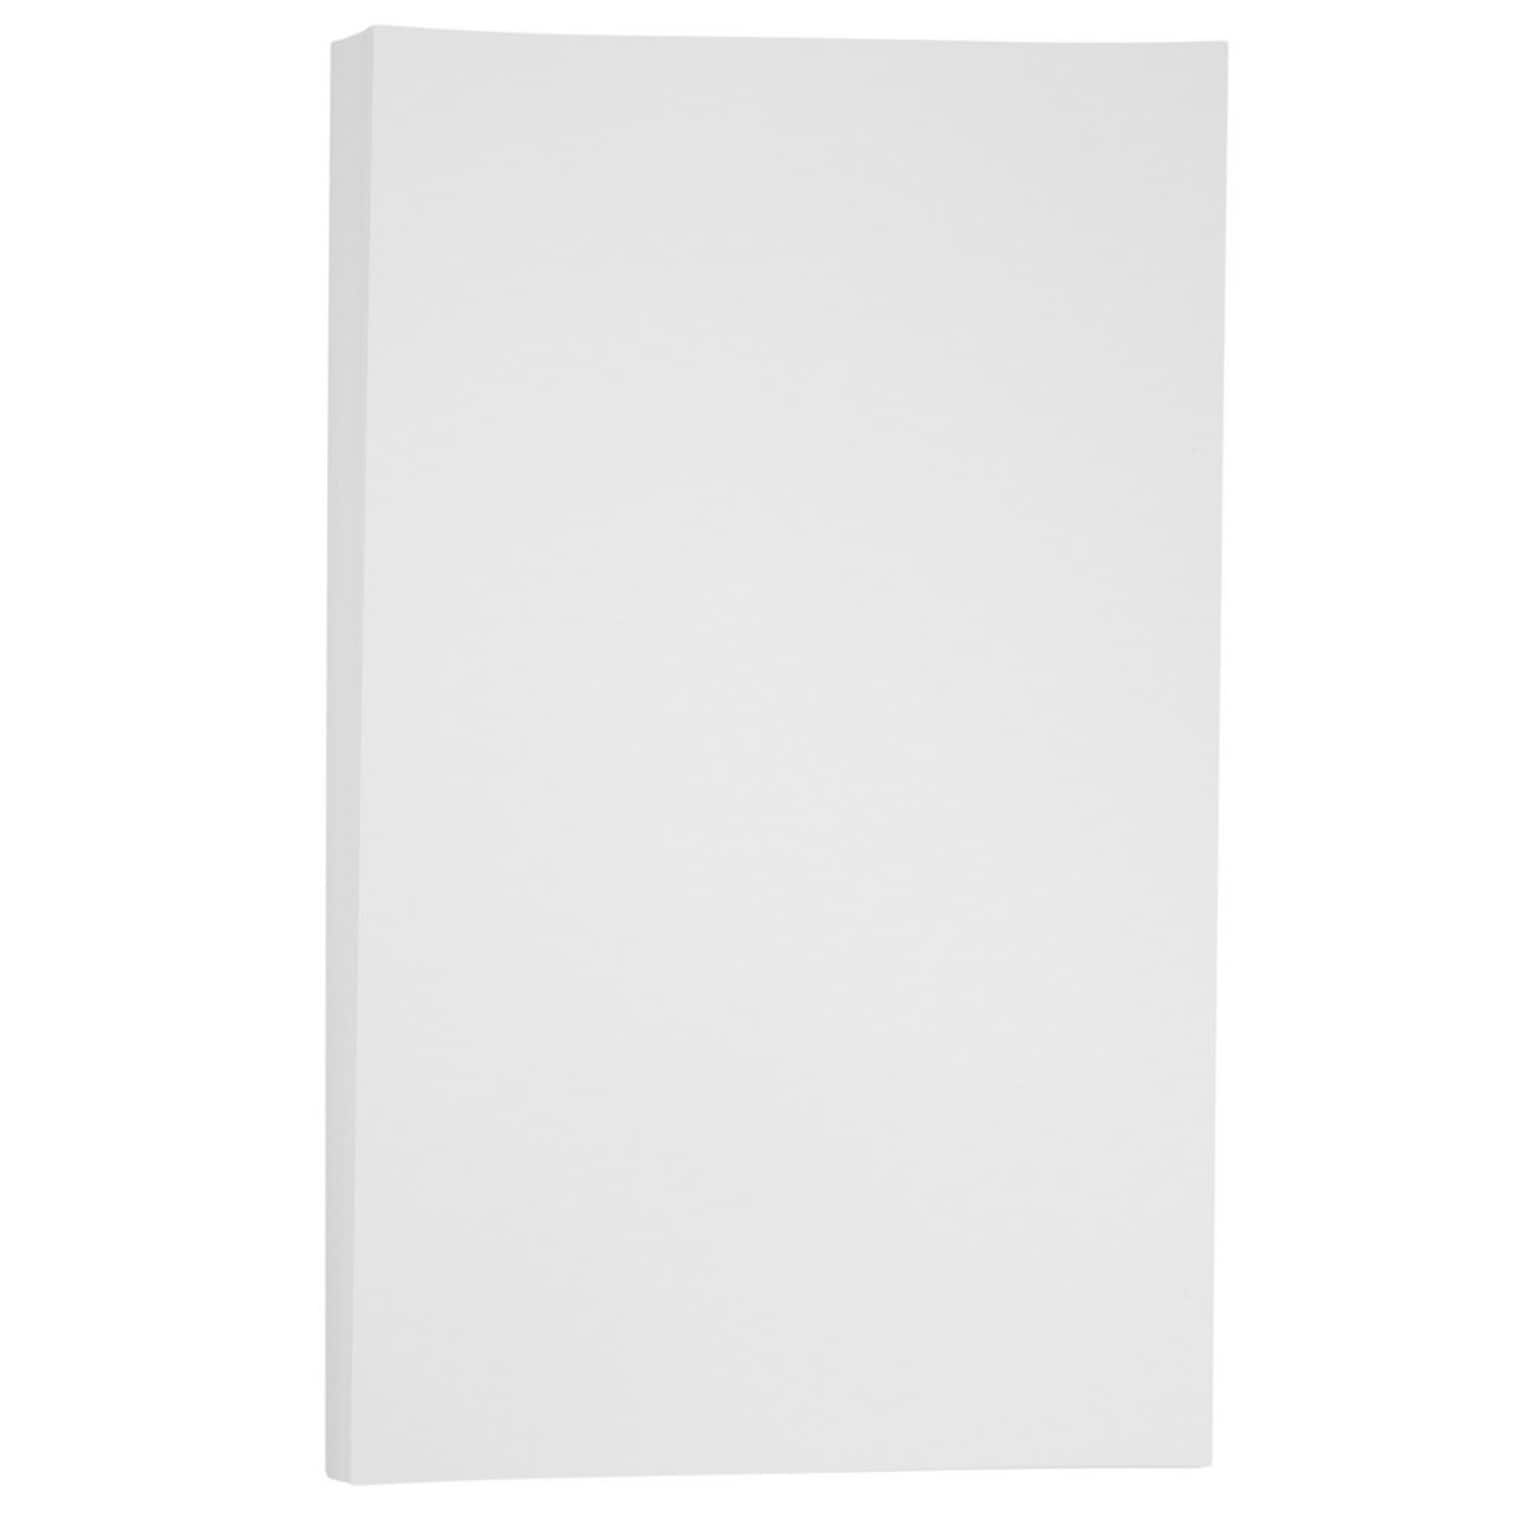 JAM Paper® Vellum Bristol 67lb Cardstock, 11 x 17 Tabloid Coverstock, White, 50 Sheets/Pack (16934188)